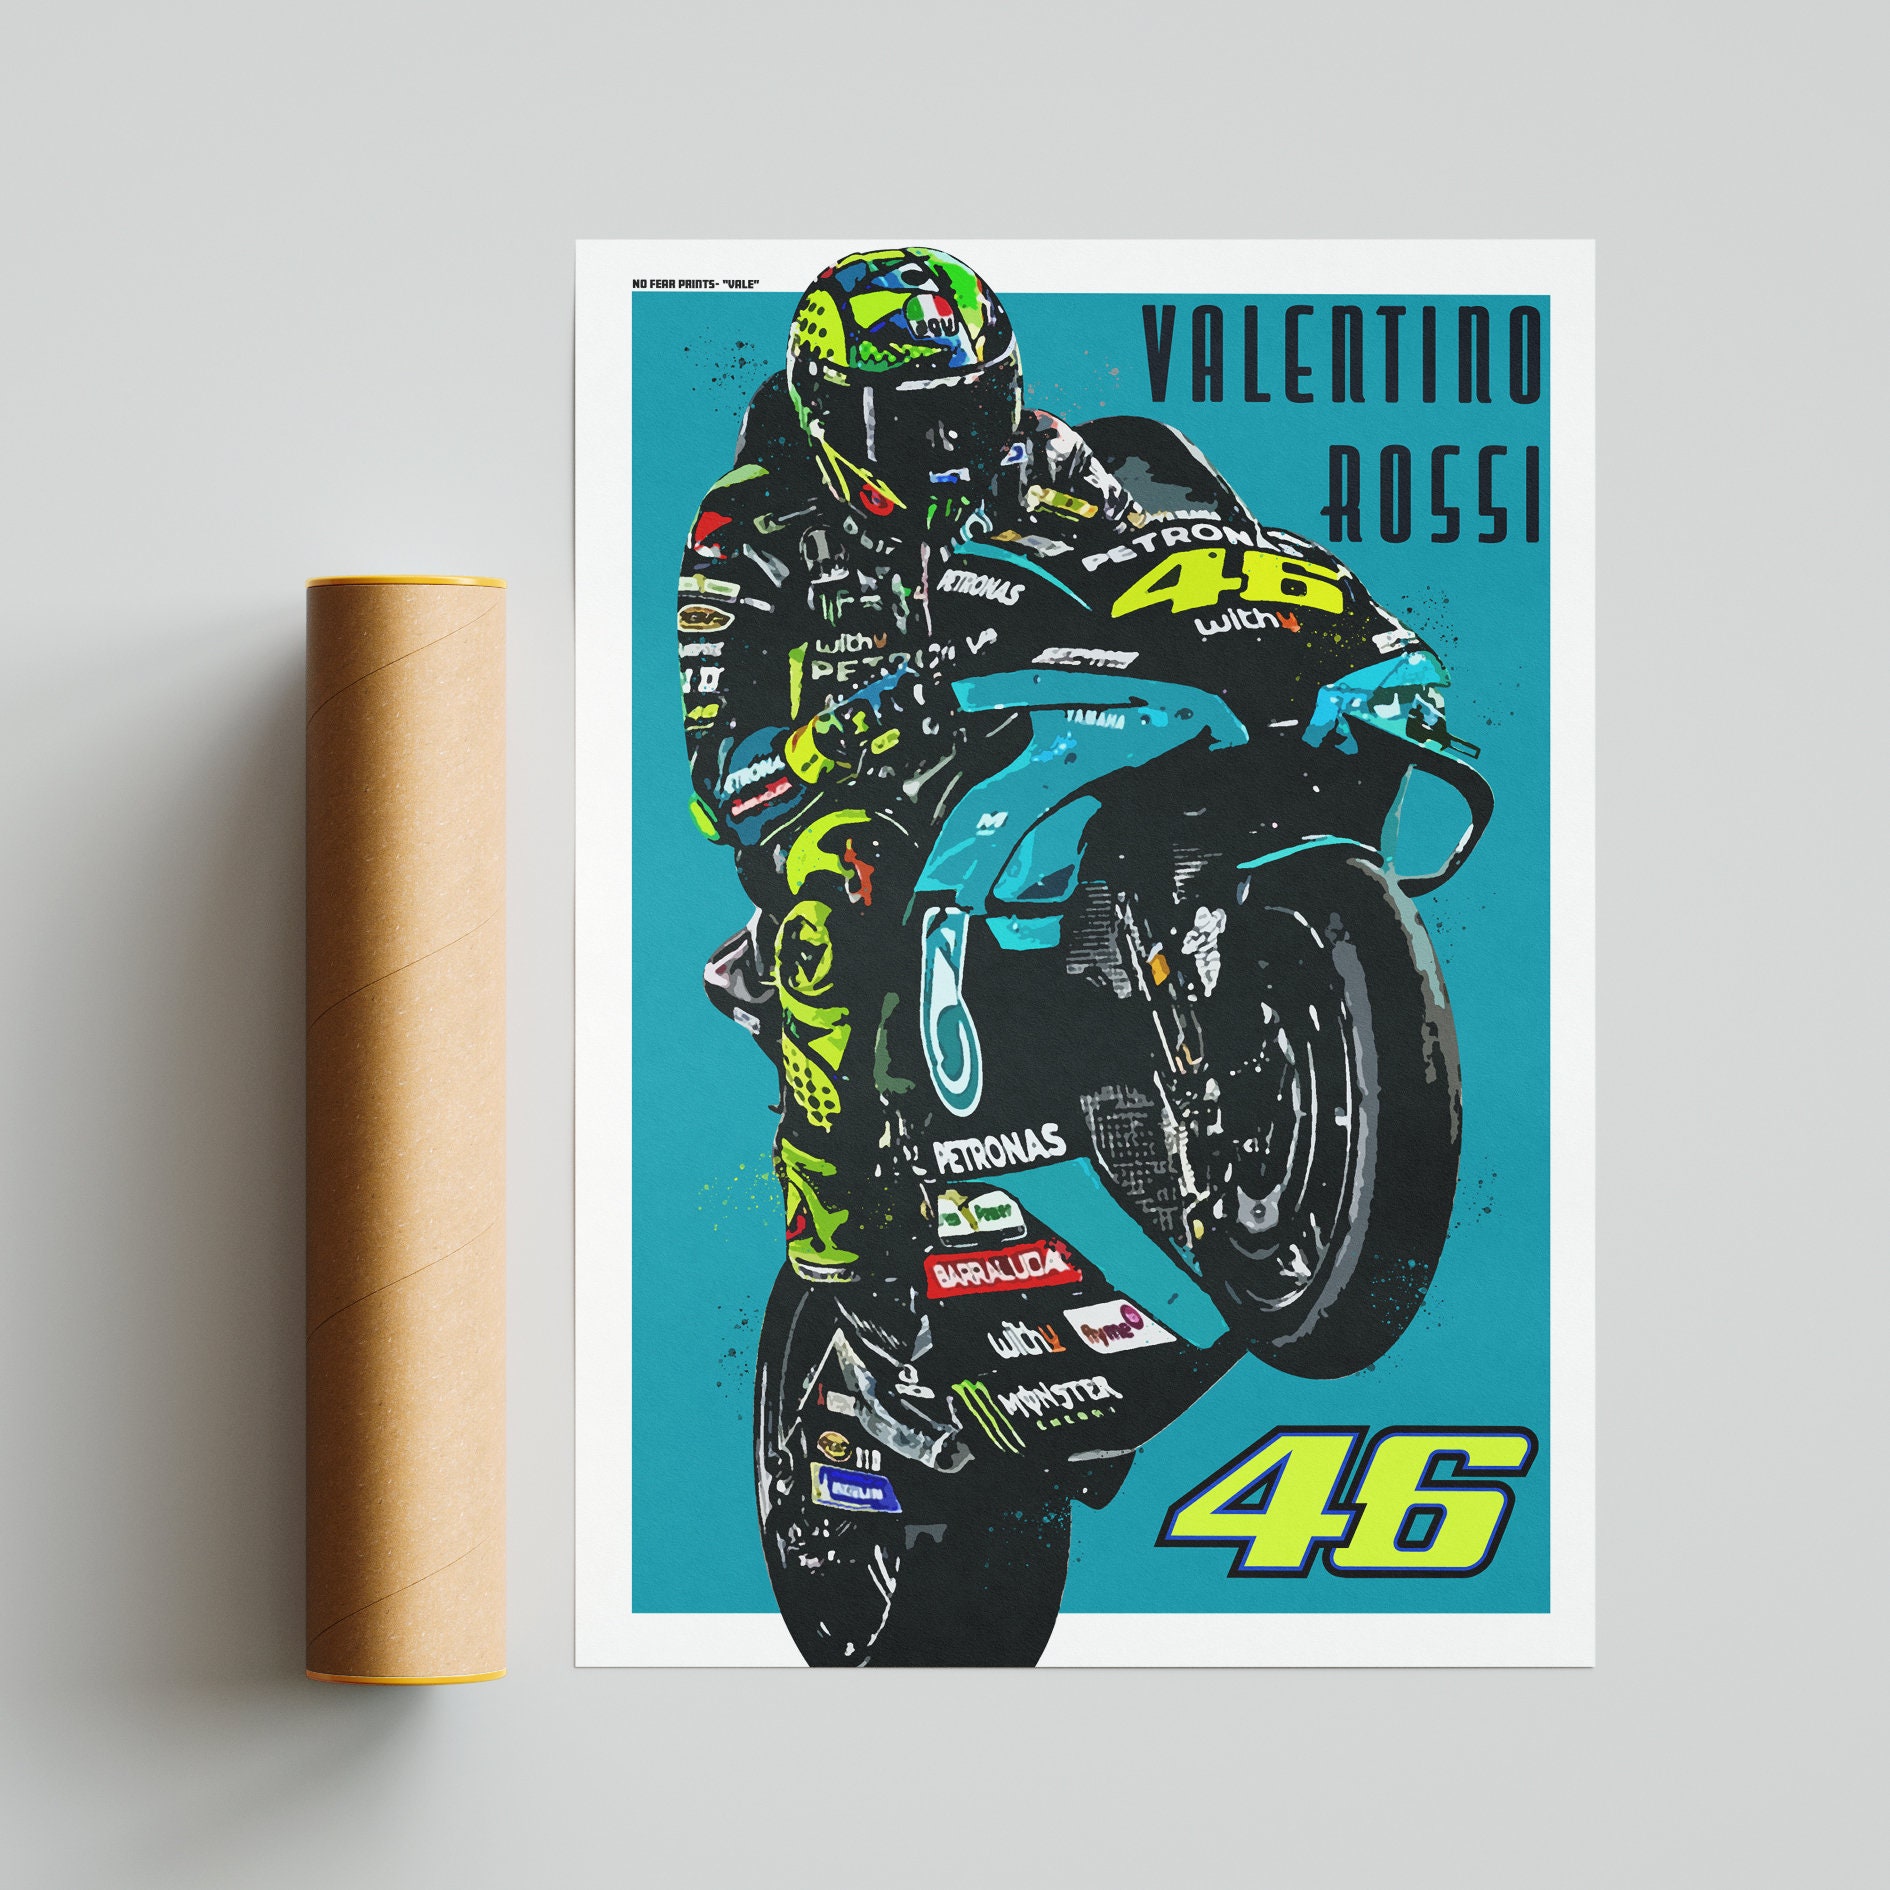 Buy Valentino Rossi Petronas Yamaha Motogp Wall Art Poster Print Online in India